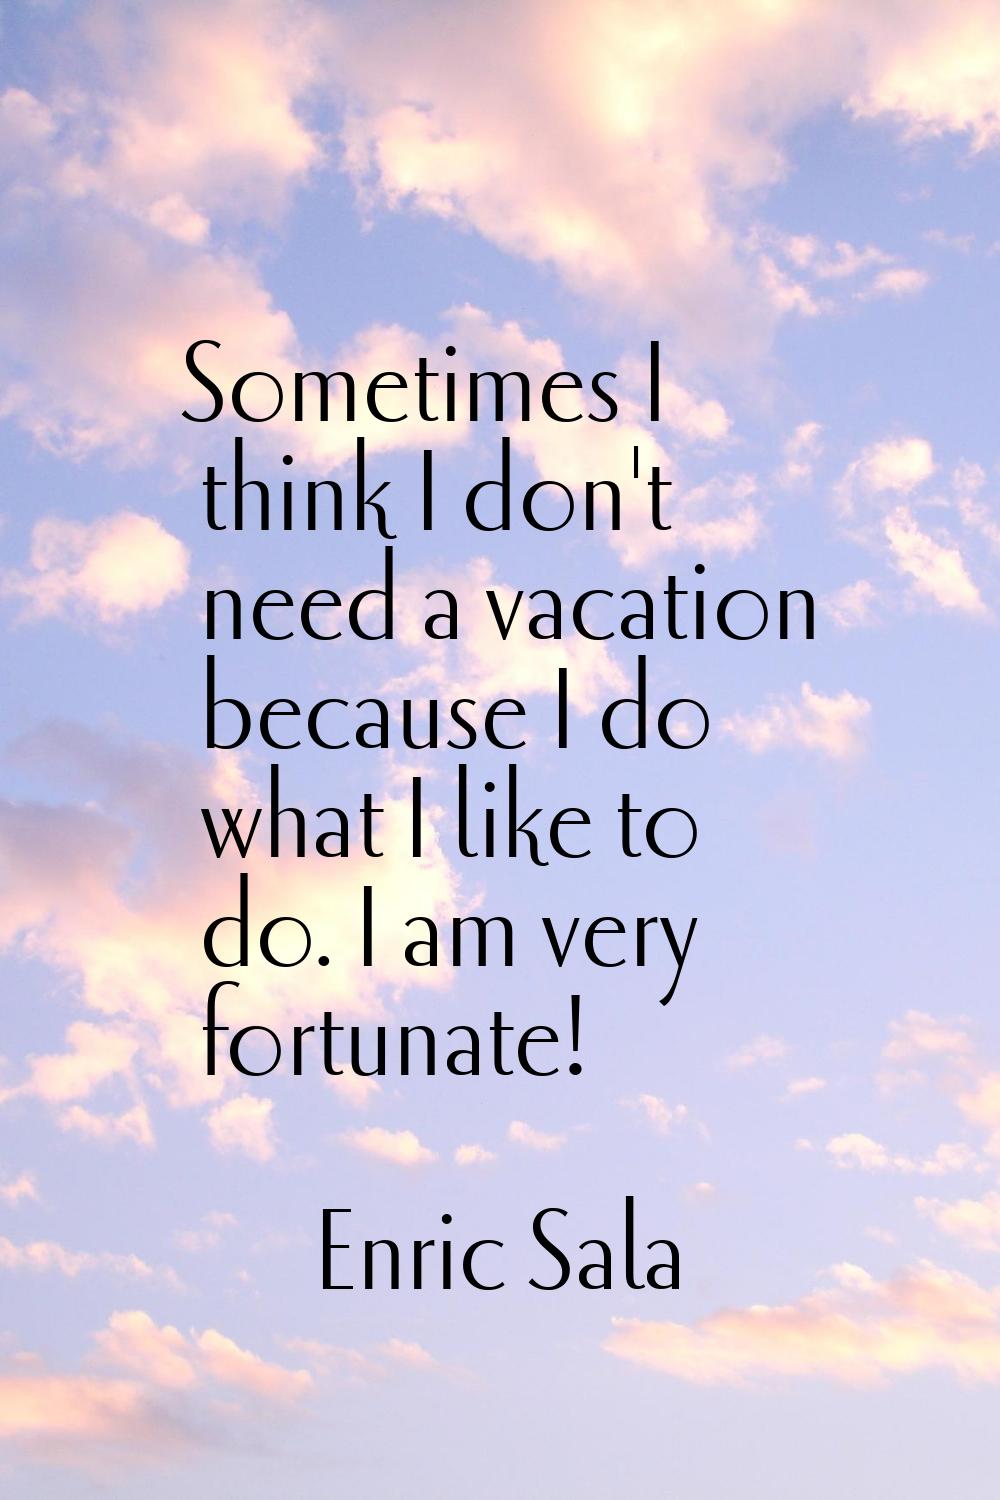 Sometimes I think I don't need a vacation because I do what I like to do. I am very fortunate!